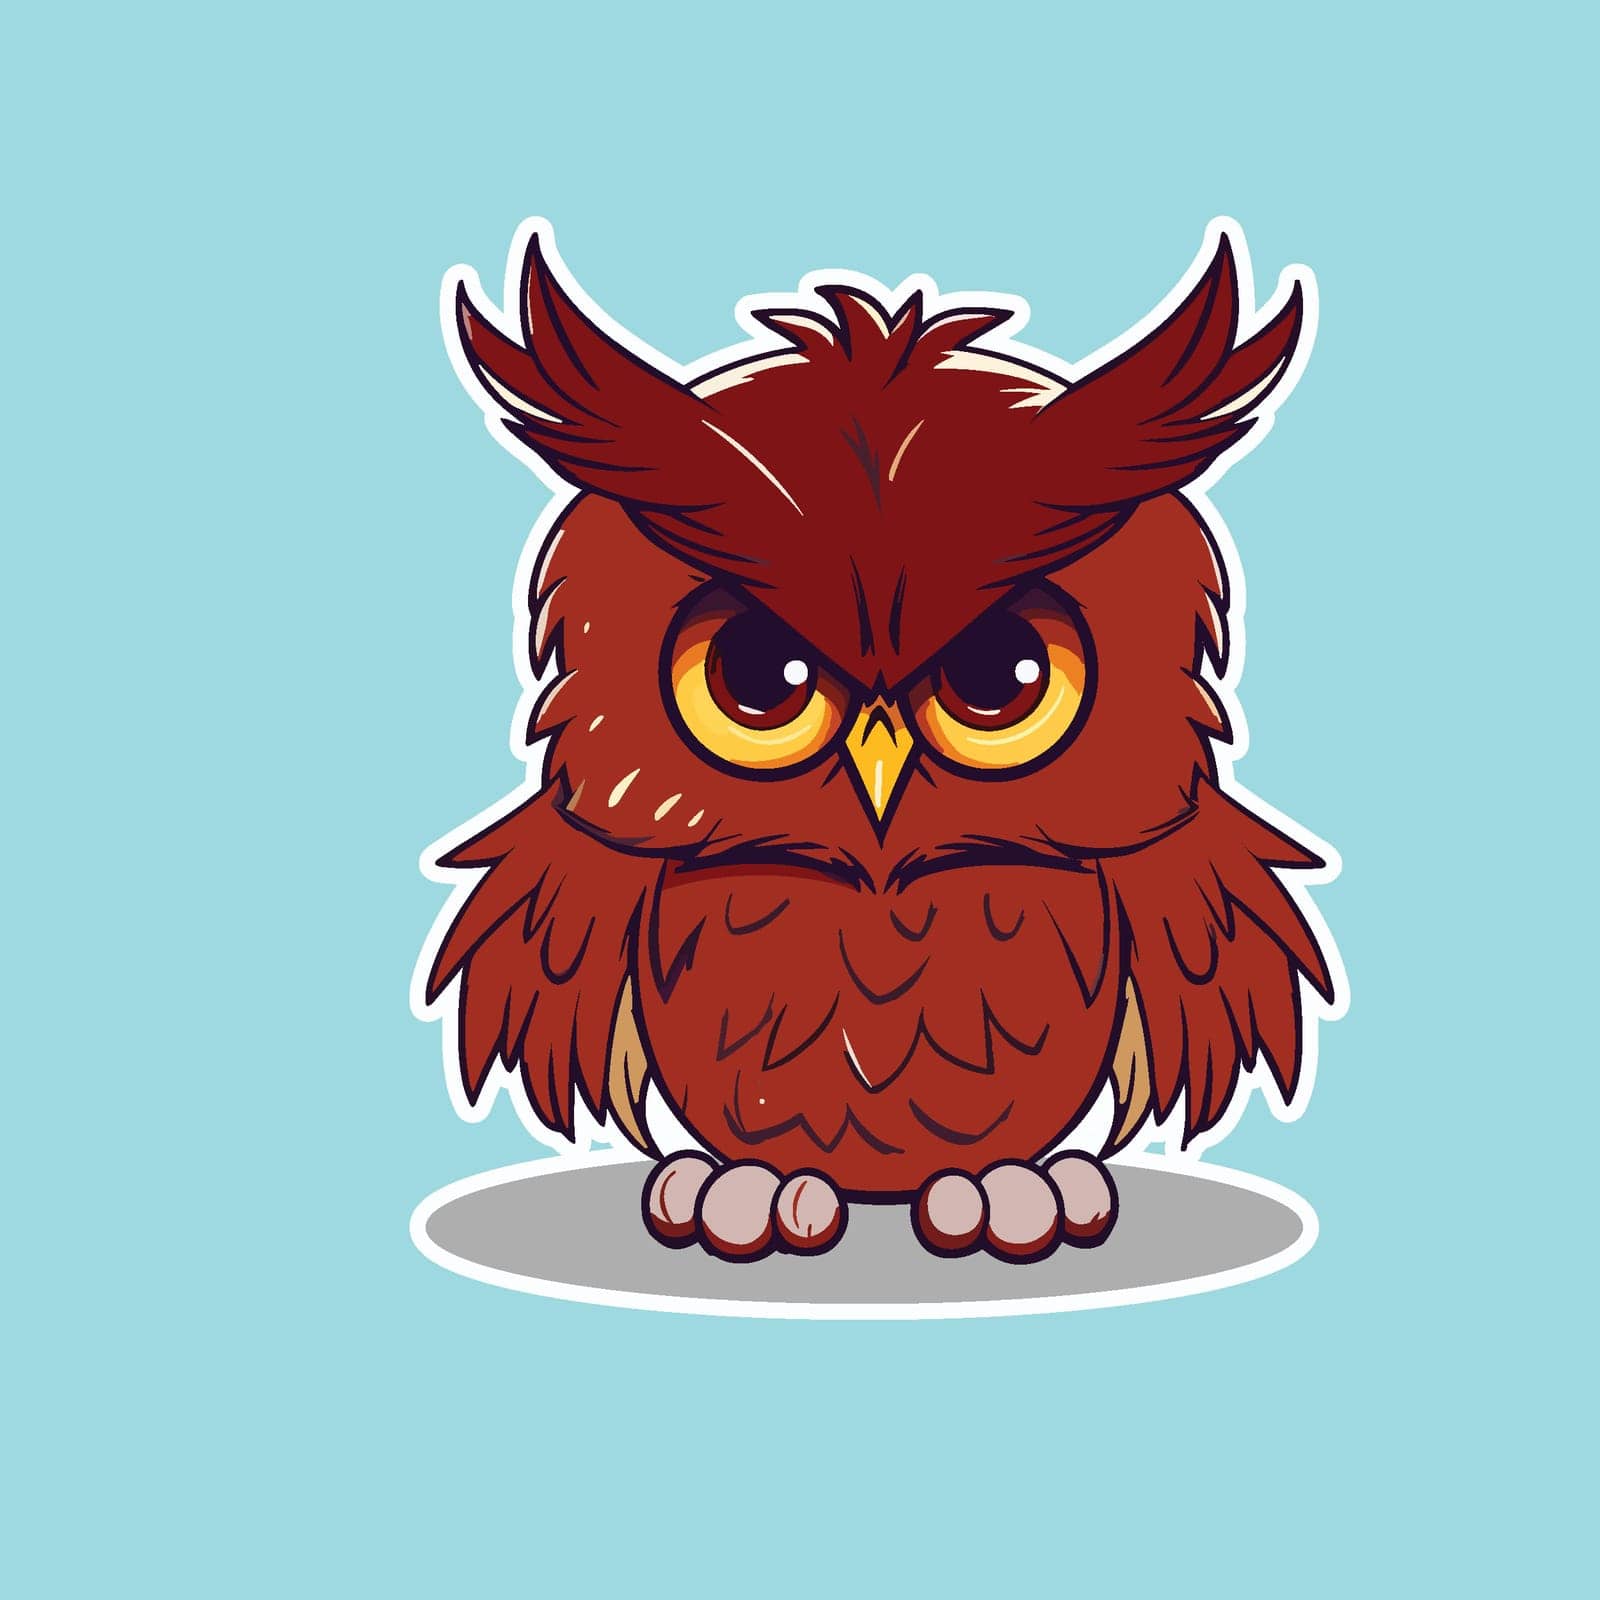 Red Owl Sticker on blue background